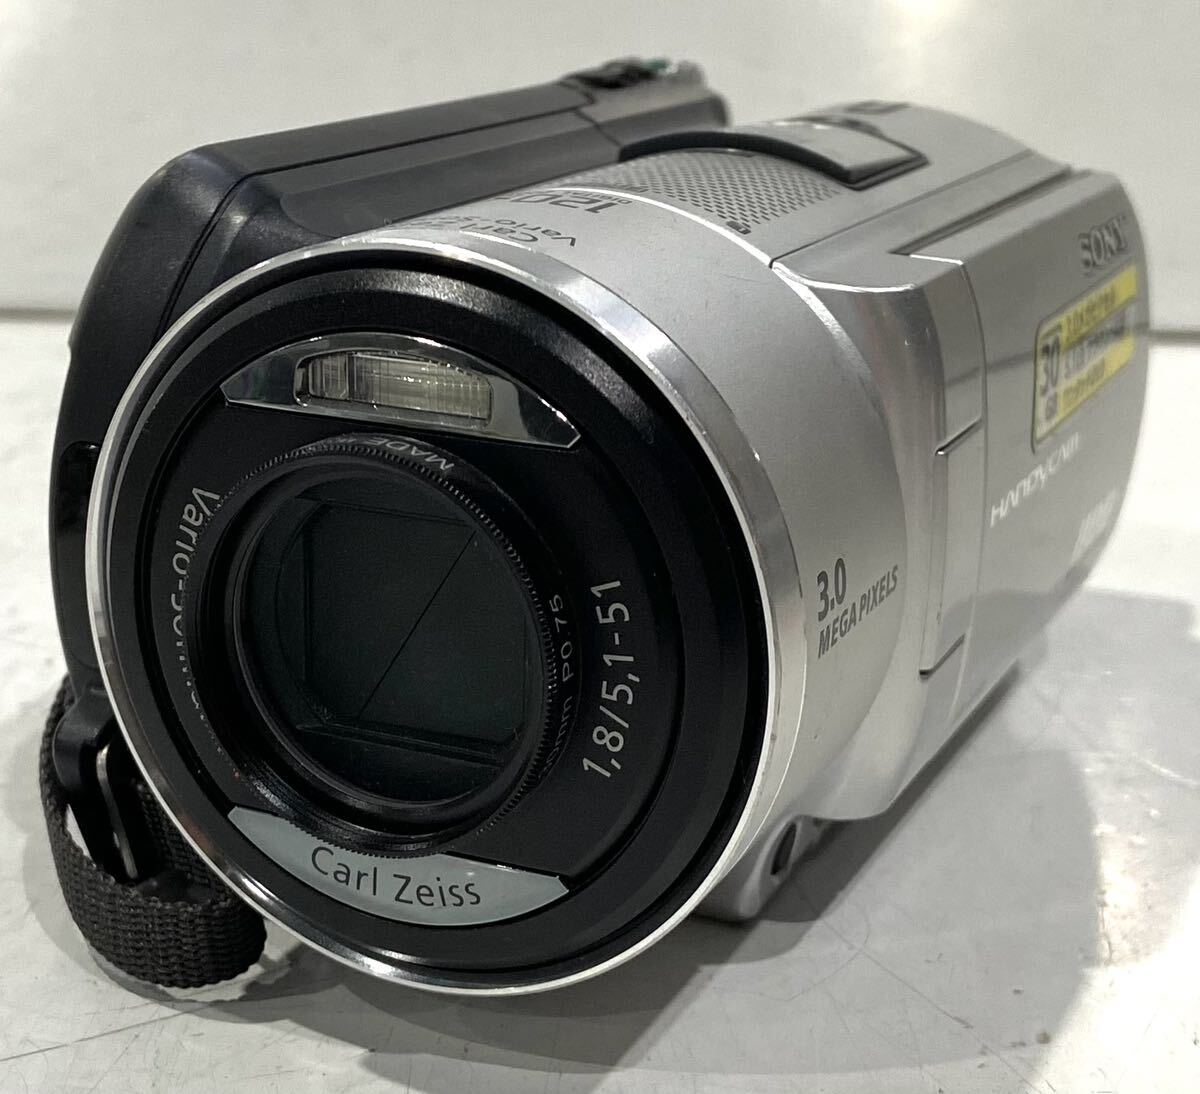 240322i☆ SONY Handycam DCR-SR100 HDD デジタルビデオカメラ ♪配送方法＝おてがる配送宅急便(EAZY)♪の画像1